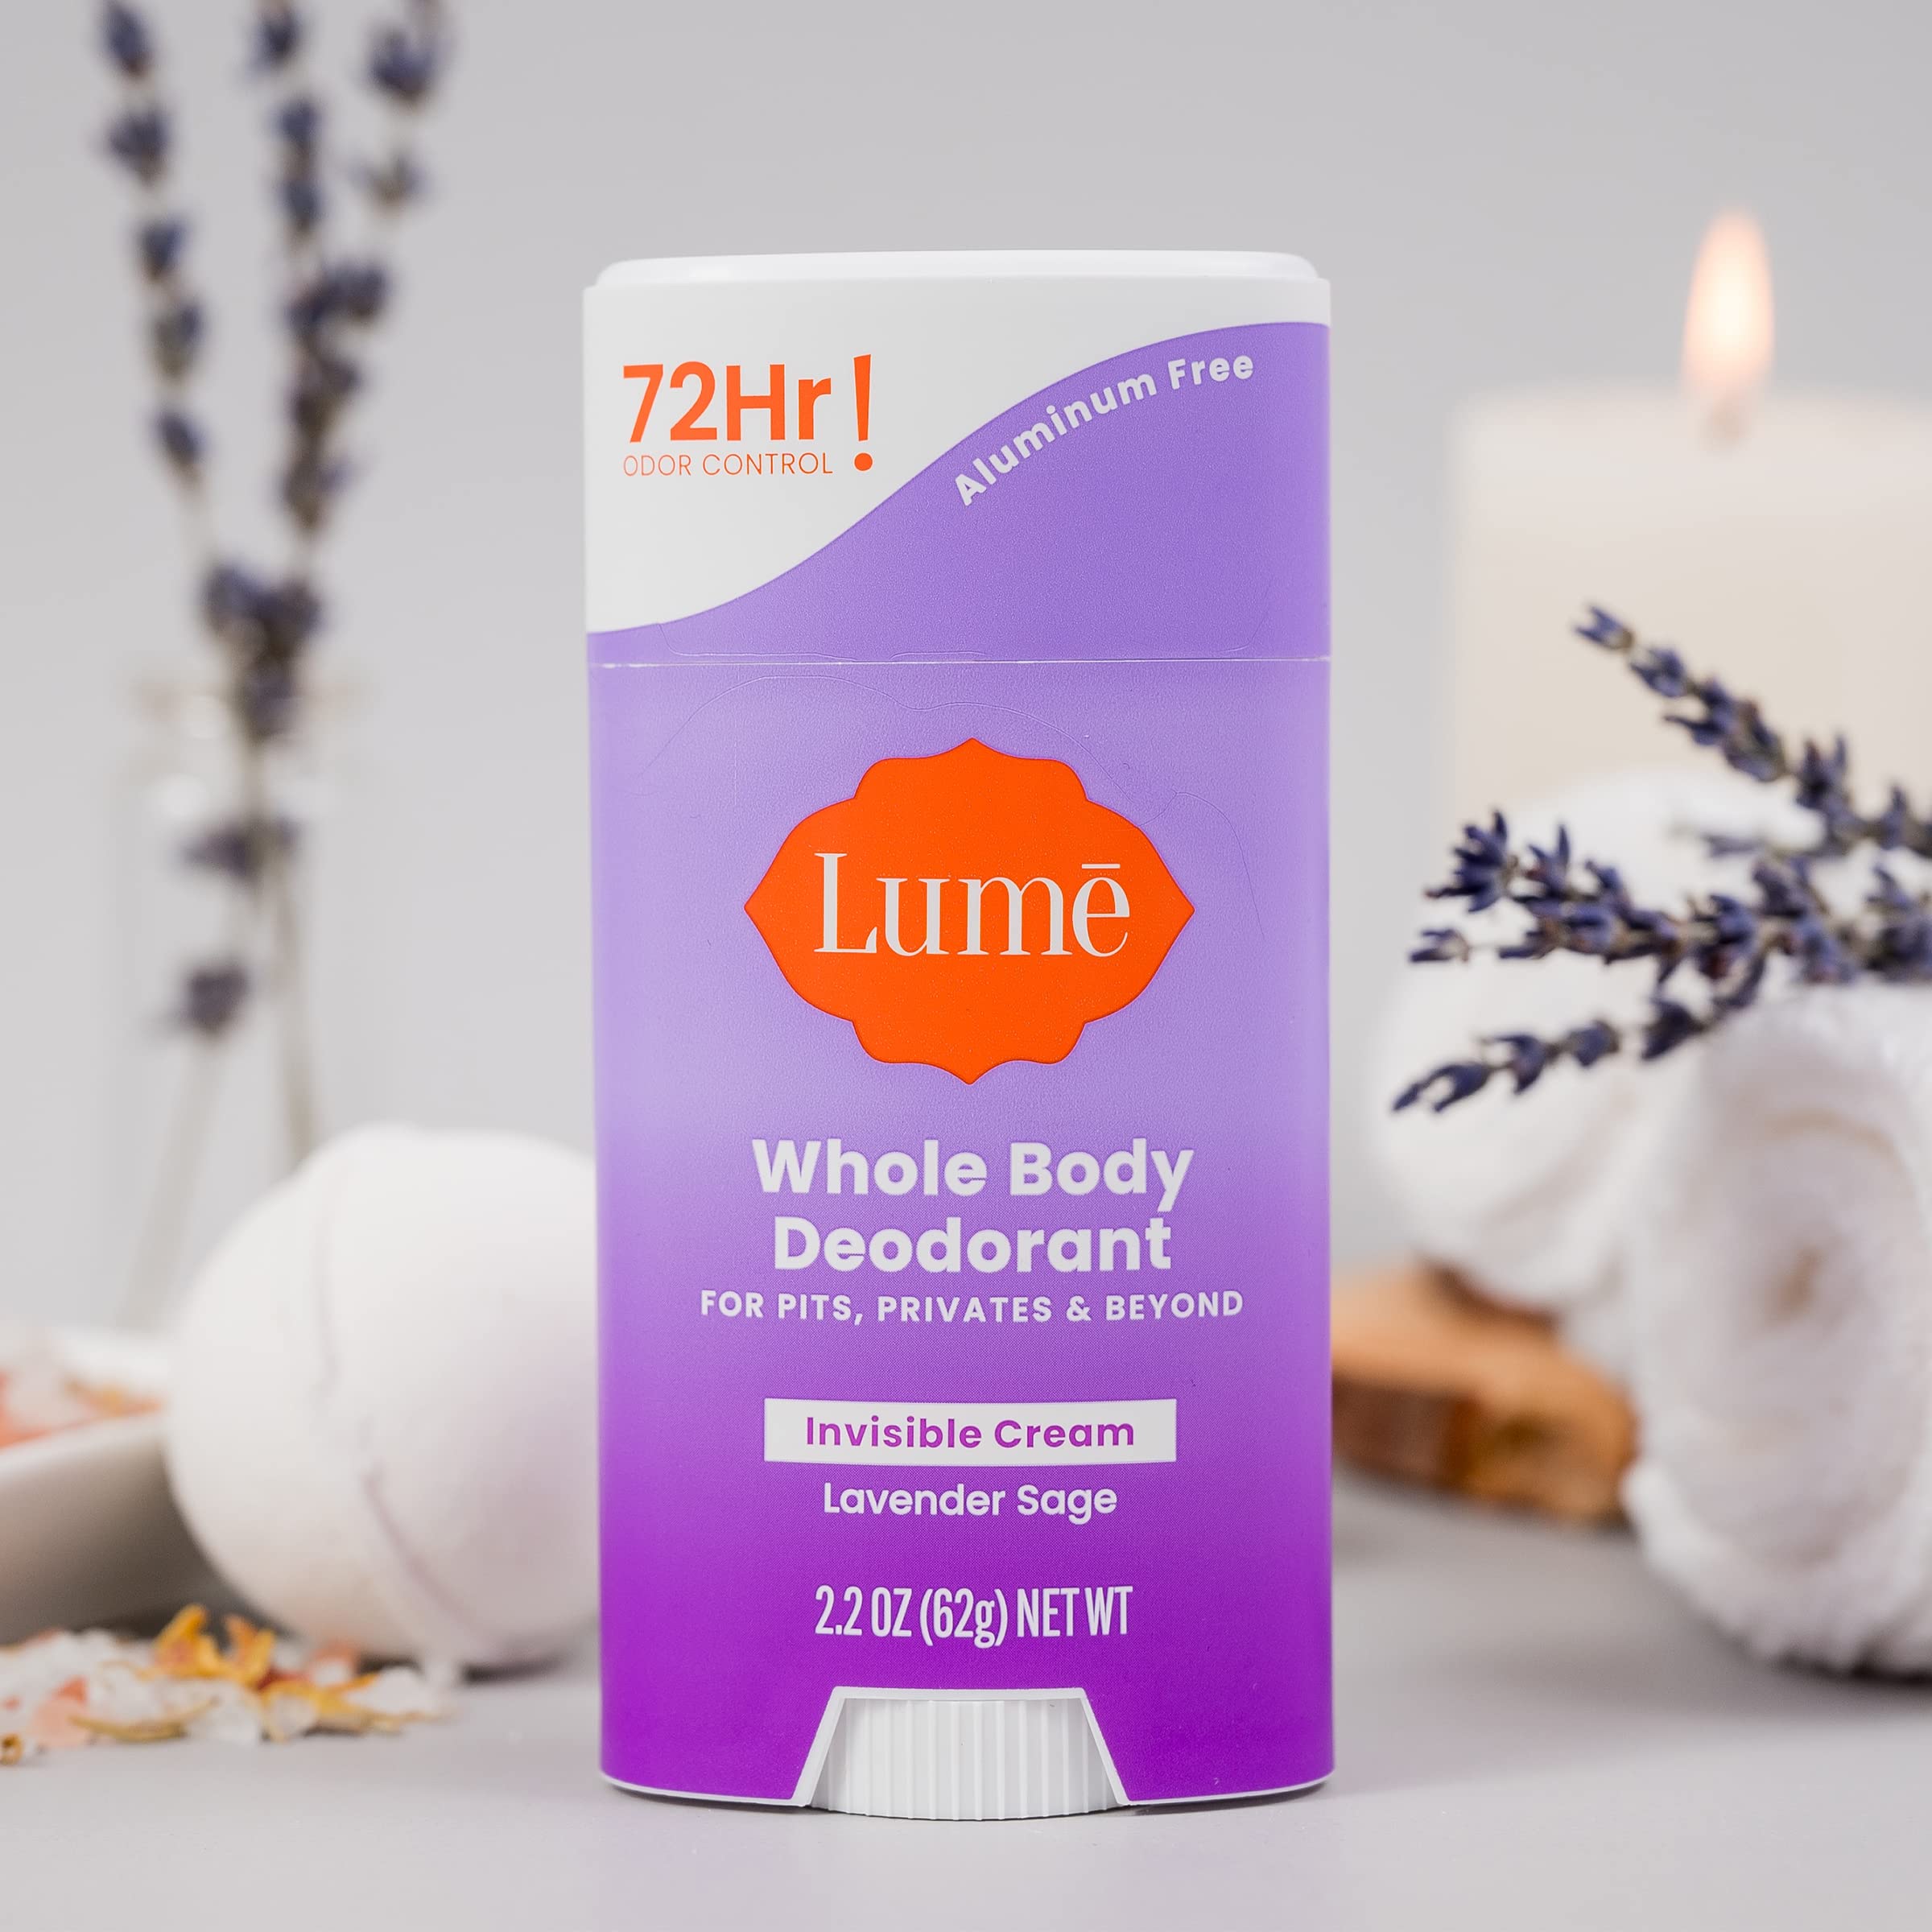 Lume Whole Body Deodorant - Invisible Cream Stick - 72 Hour Odor Control - Aluminum Free, Baking Soda Free, Skin Safe - 2.2 ounce (Lavender Sage)